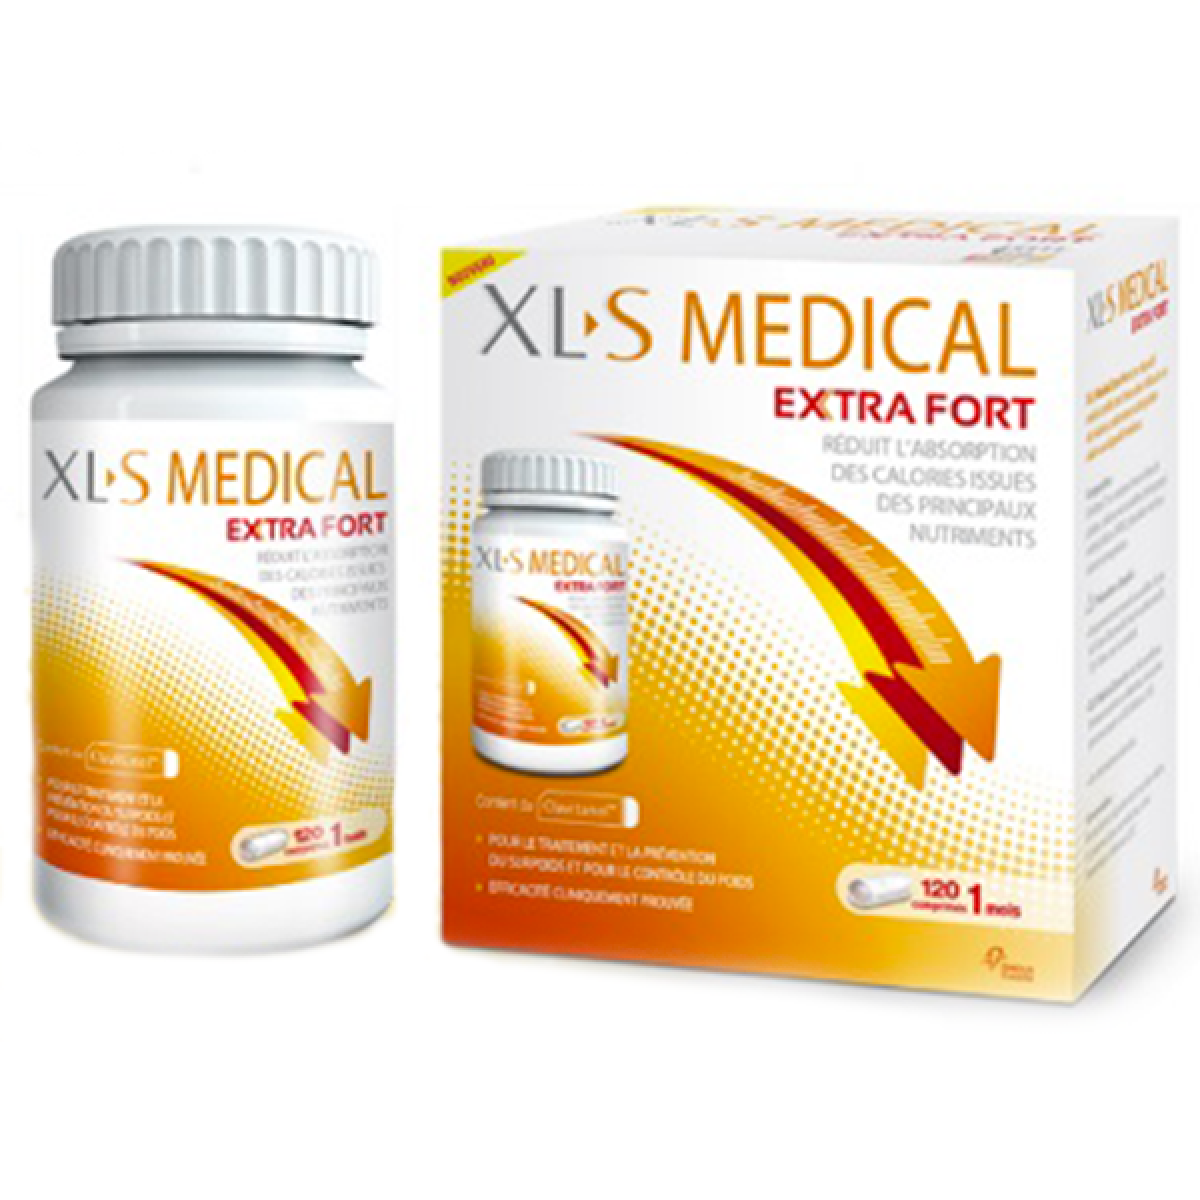 XLS Medical Extra Fort